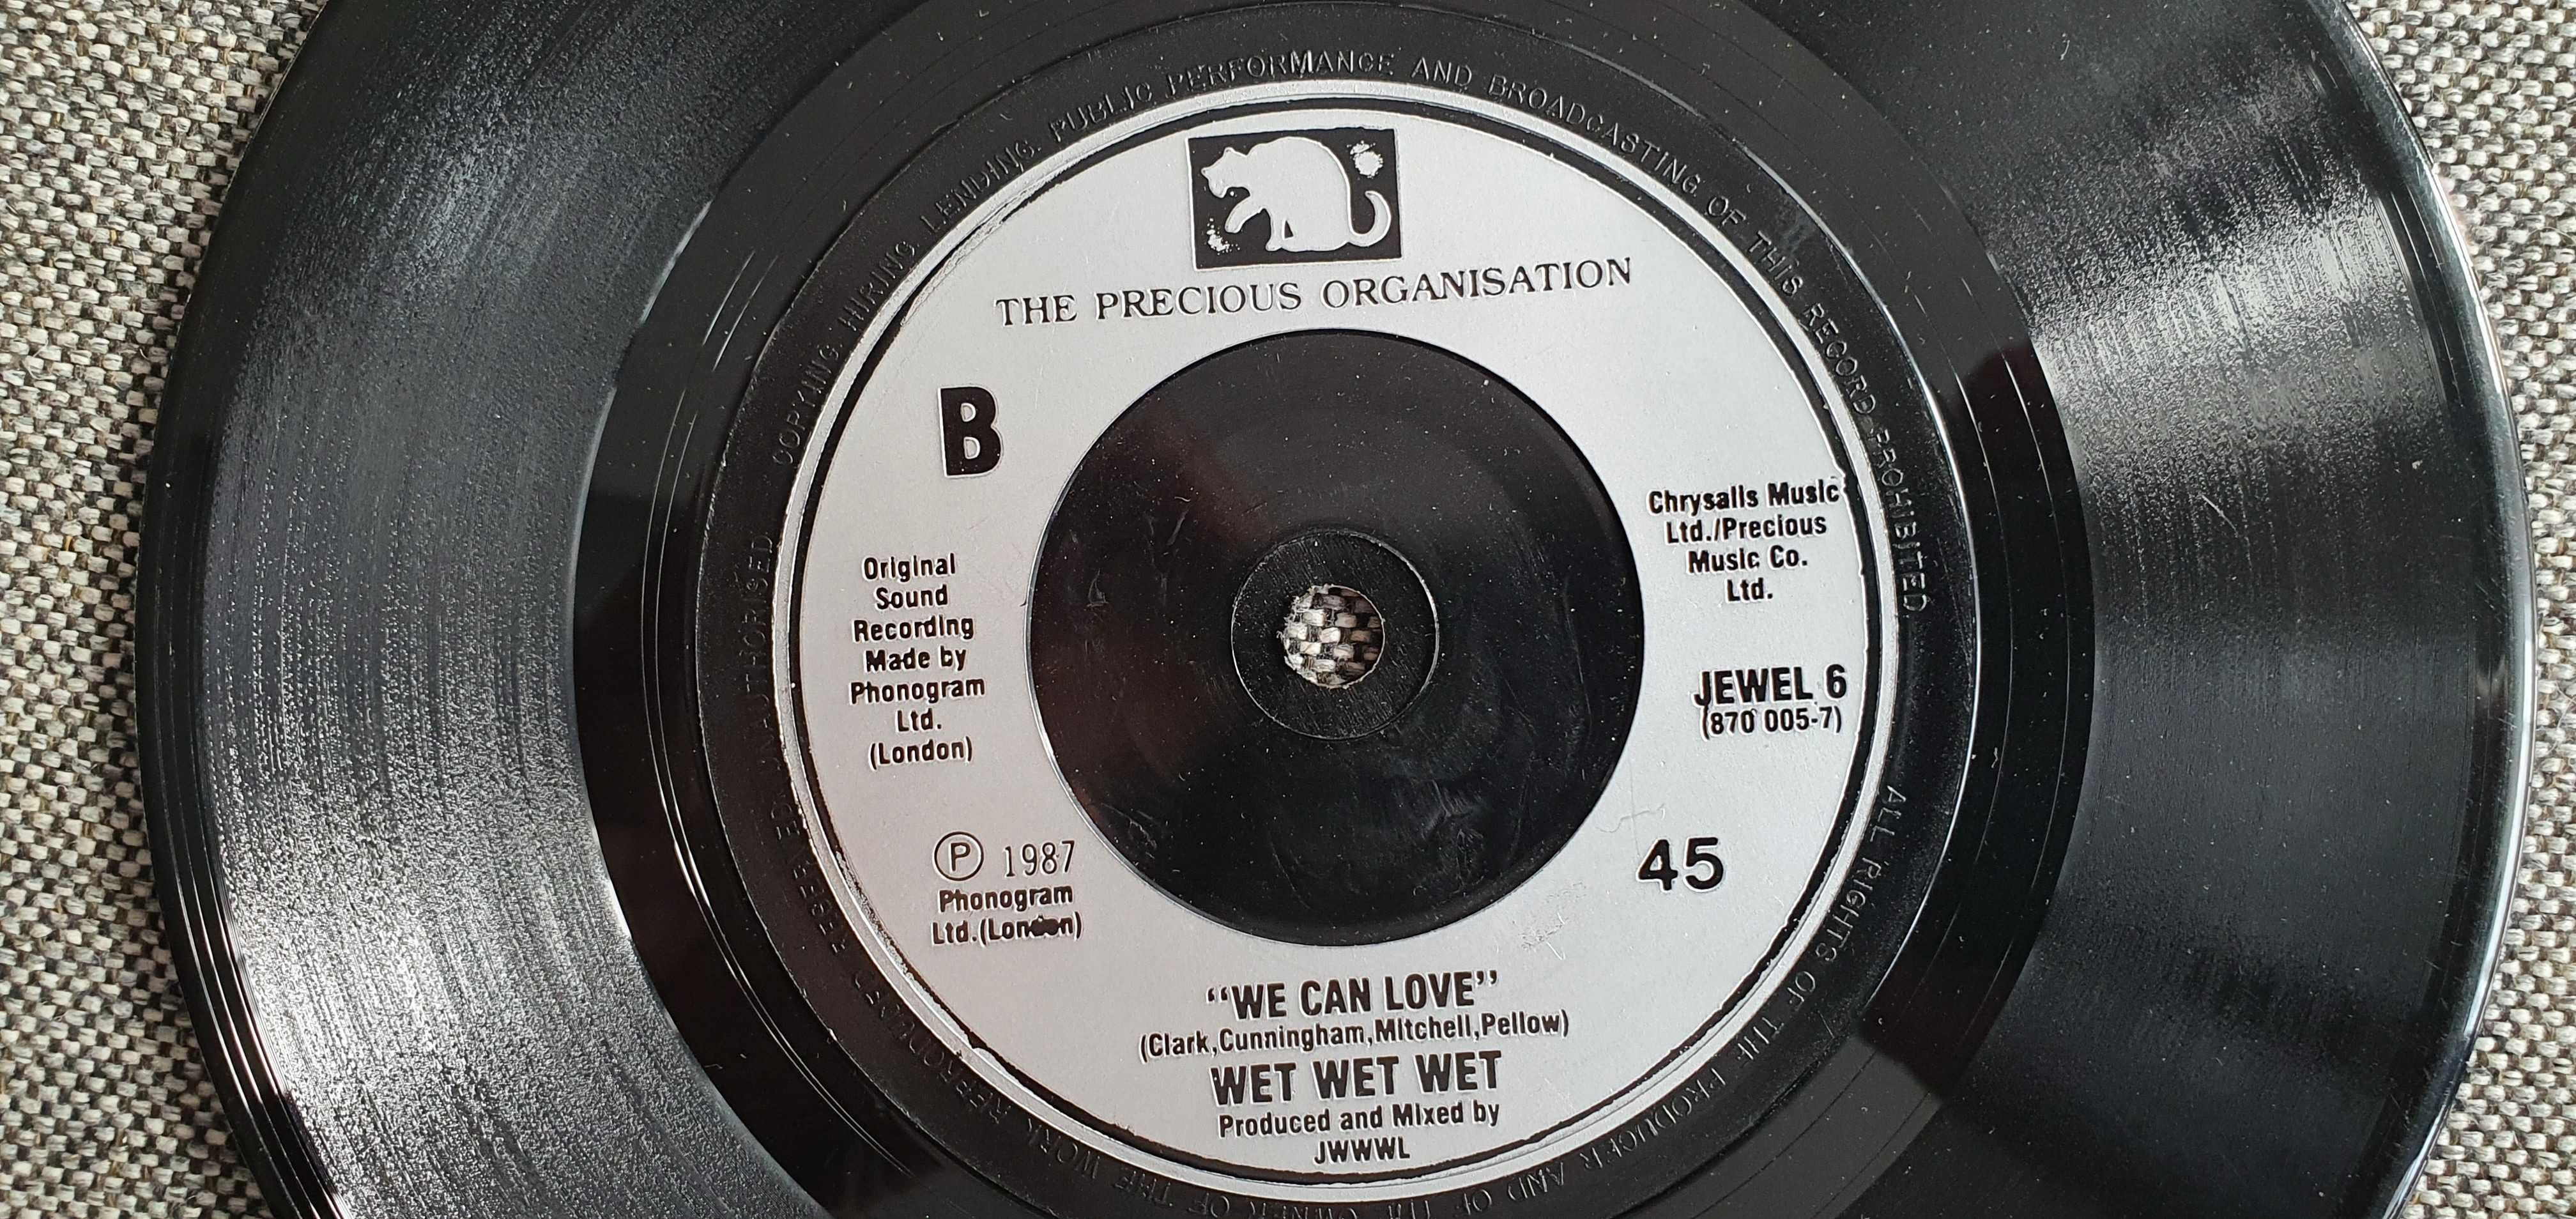 Wet Wet Wet - Angel Eyes